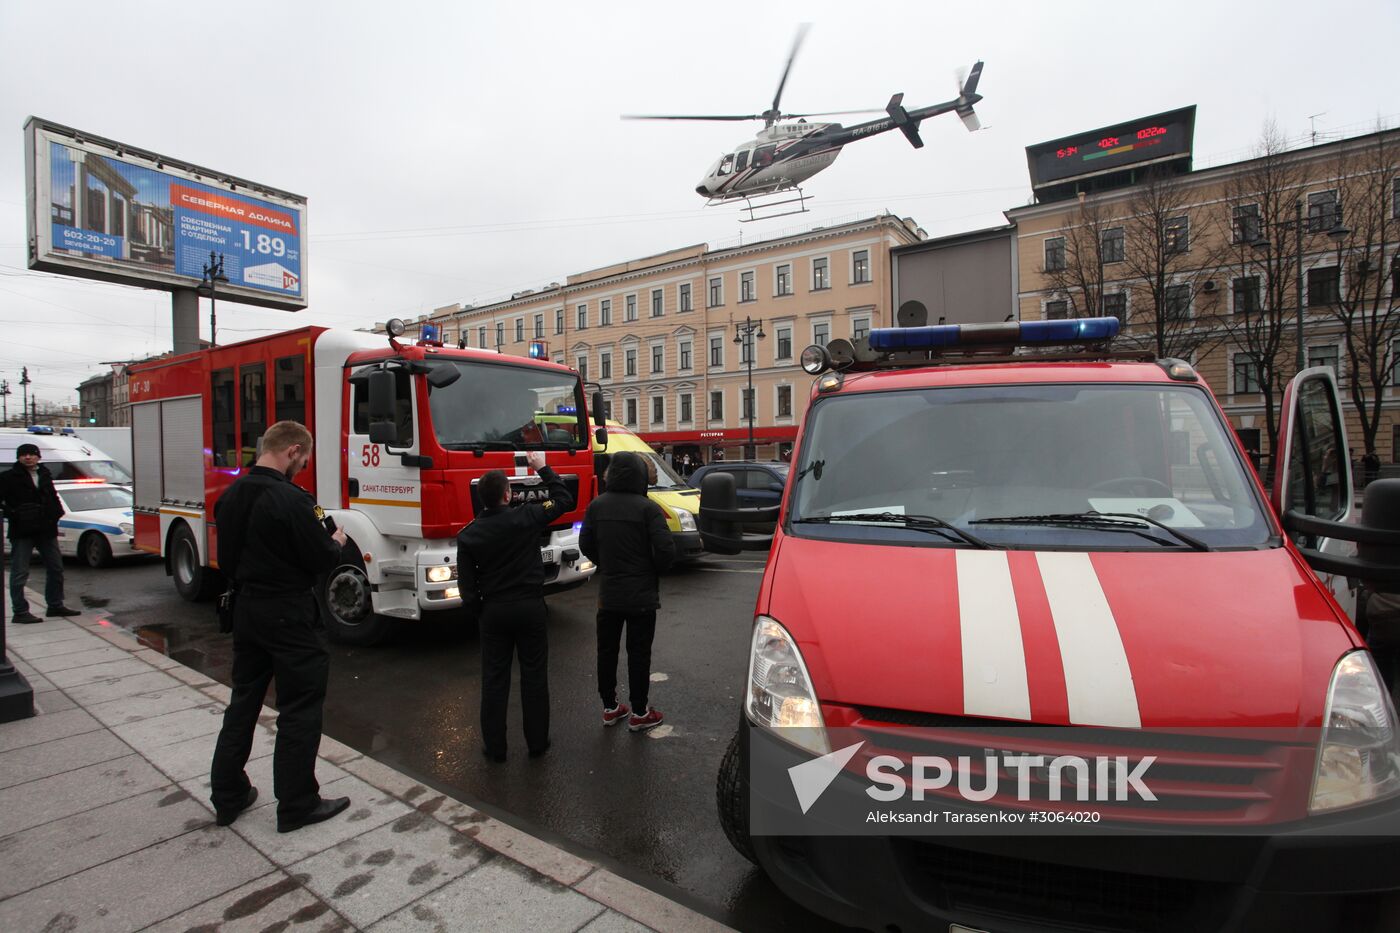 Explosions in St.Petersburg underground